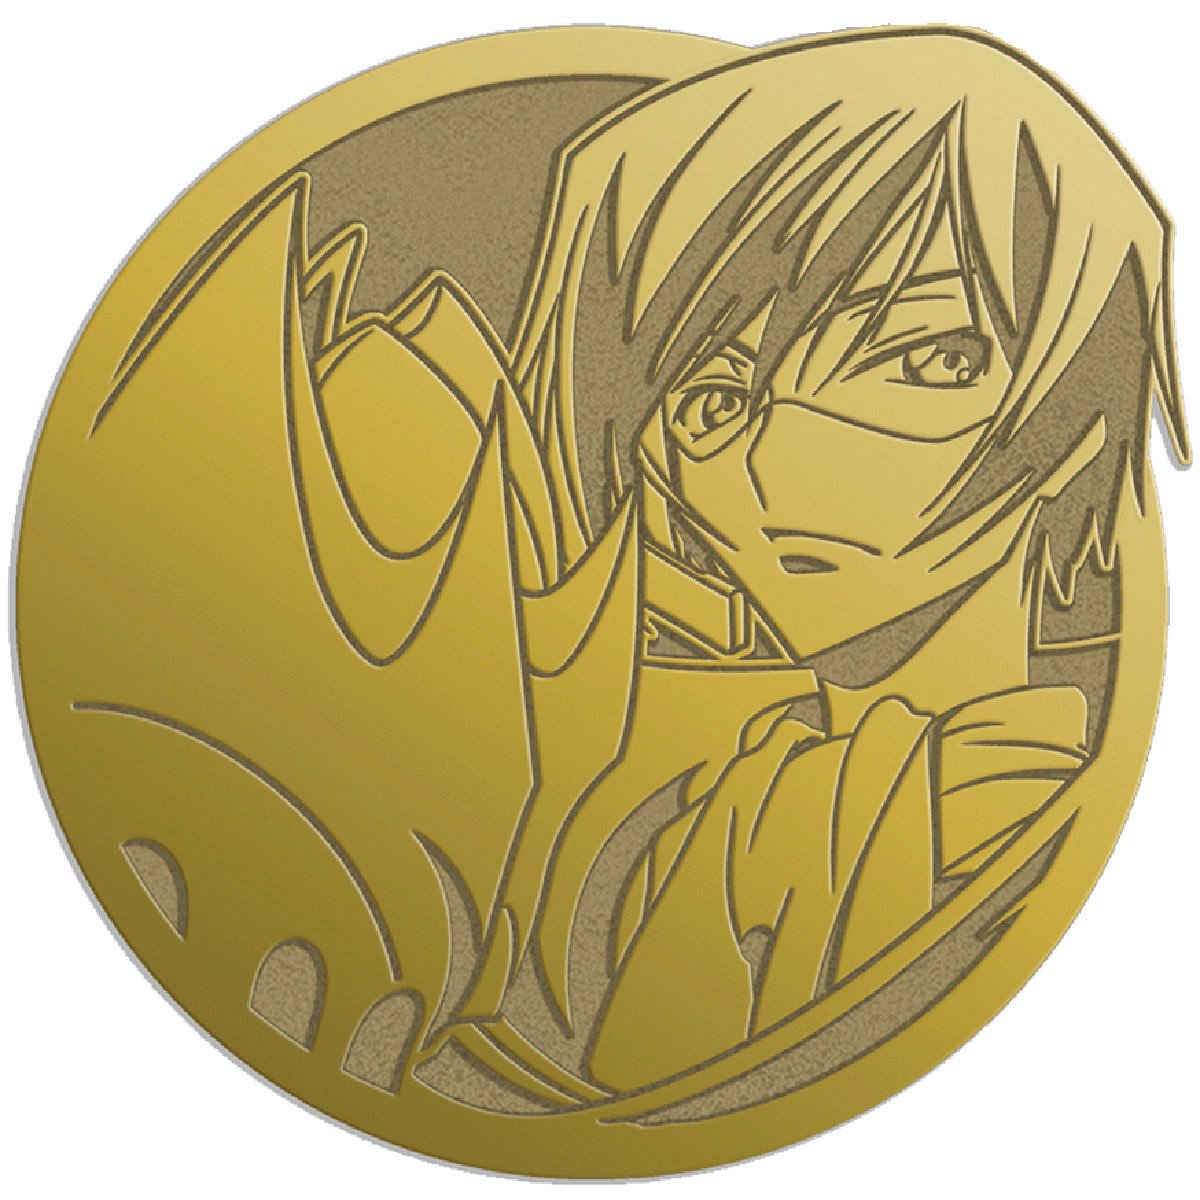 Code Geass Lelouch Limited Edition 2 Gold Enamel Pin Emblem